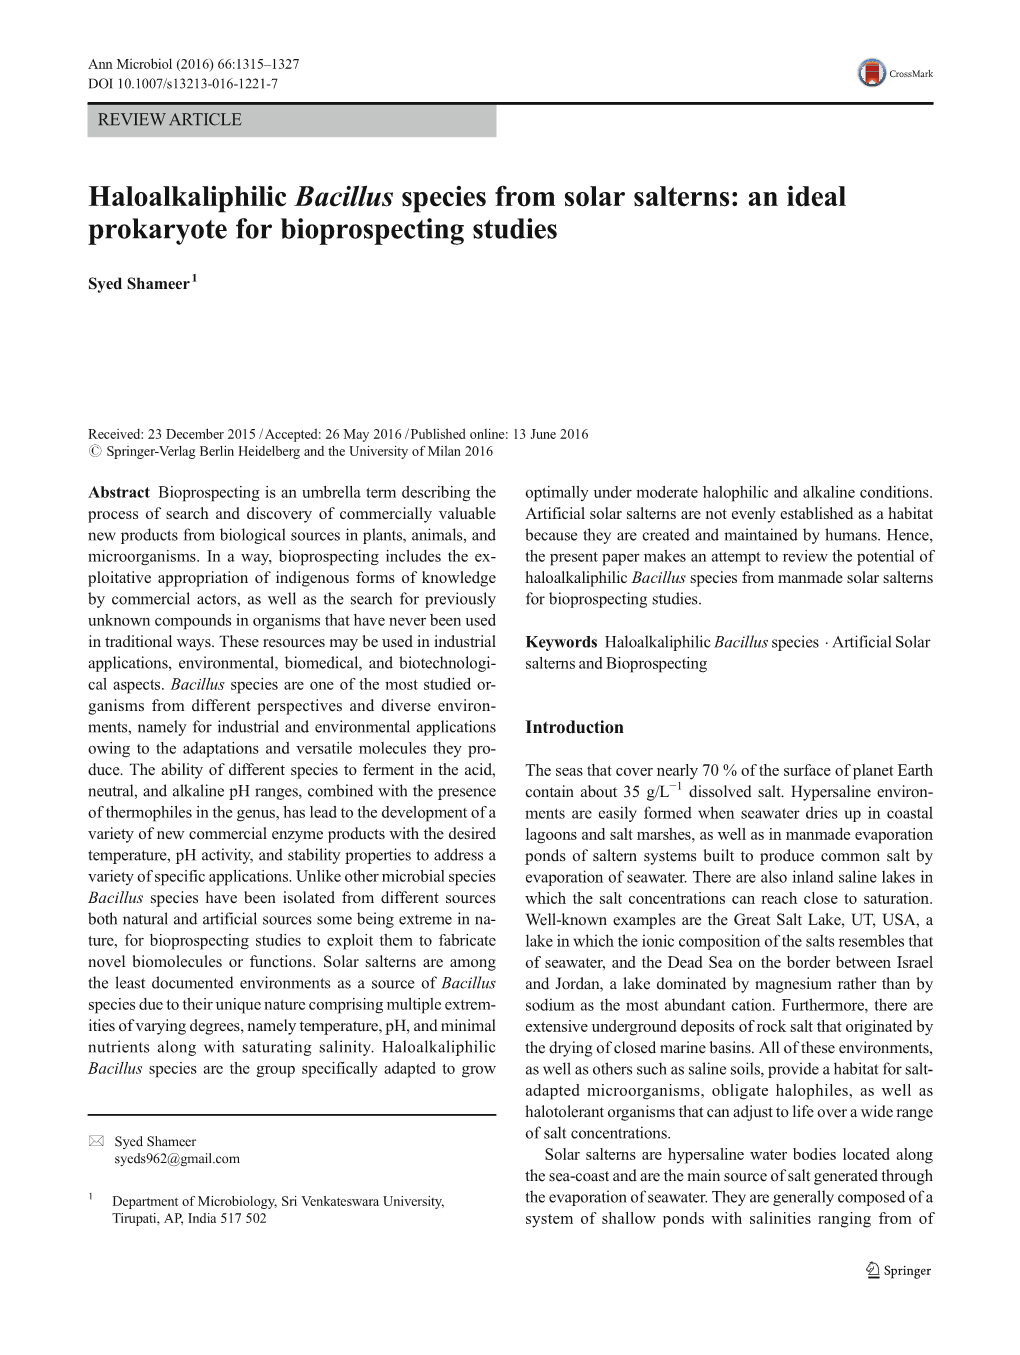 Haloalkaliphilic Bacillus Species from Solar Salterns: an Ideal Prokaryote for Bioprospecting Studies